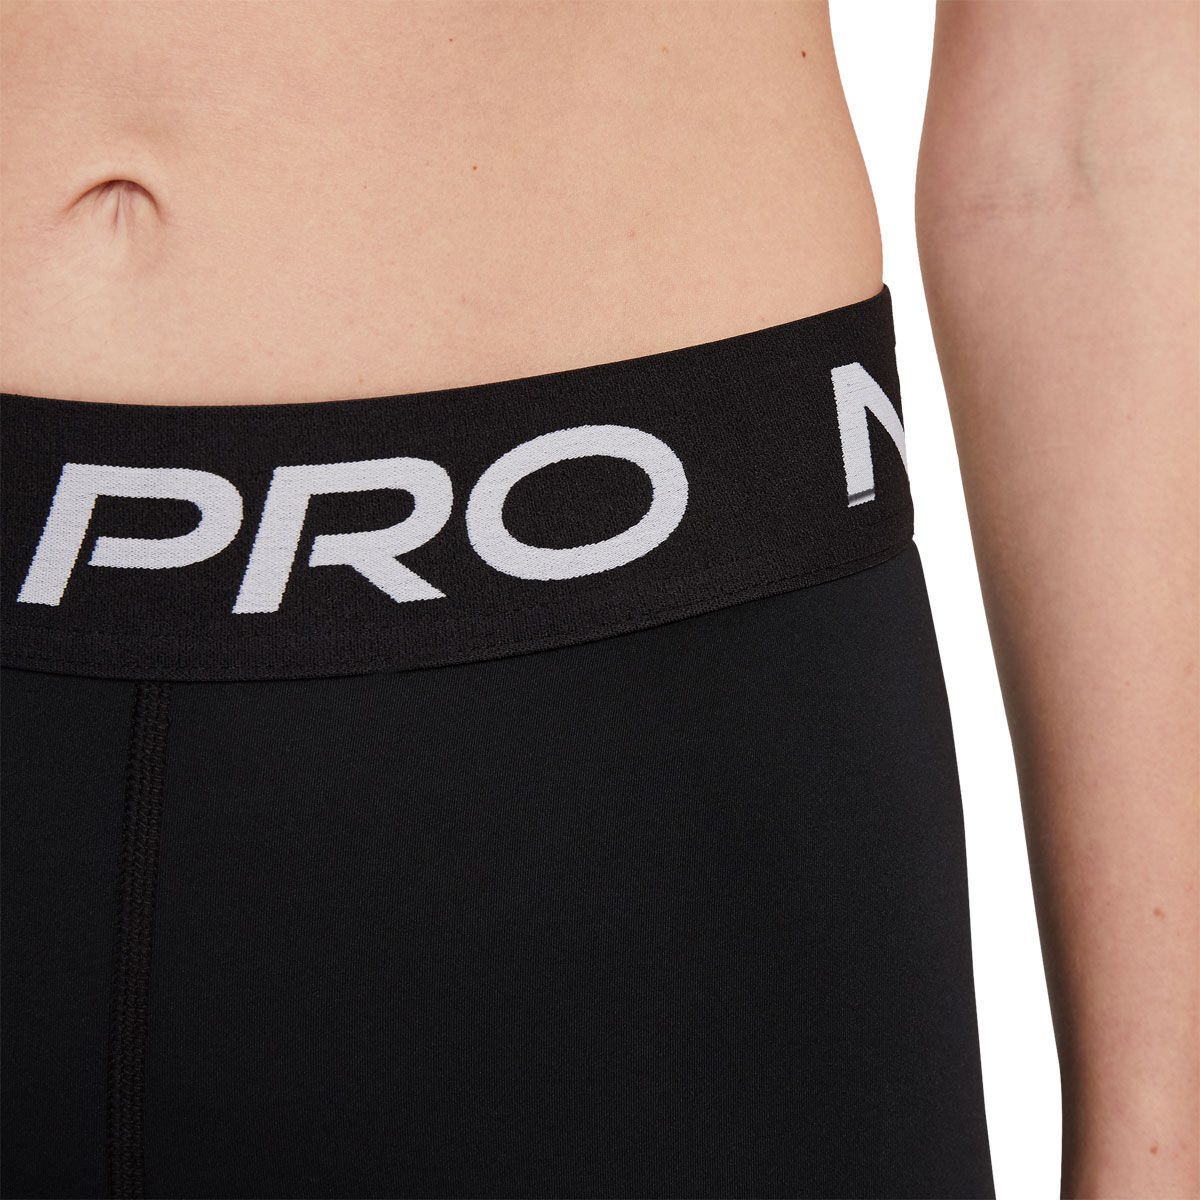 Nike Pro Womens 365 5 Inch Short Tights Black/White XS, Black/White, rebel_hi-res